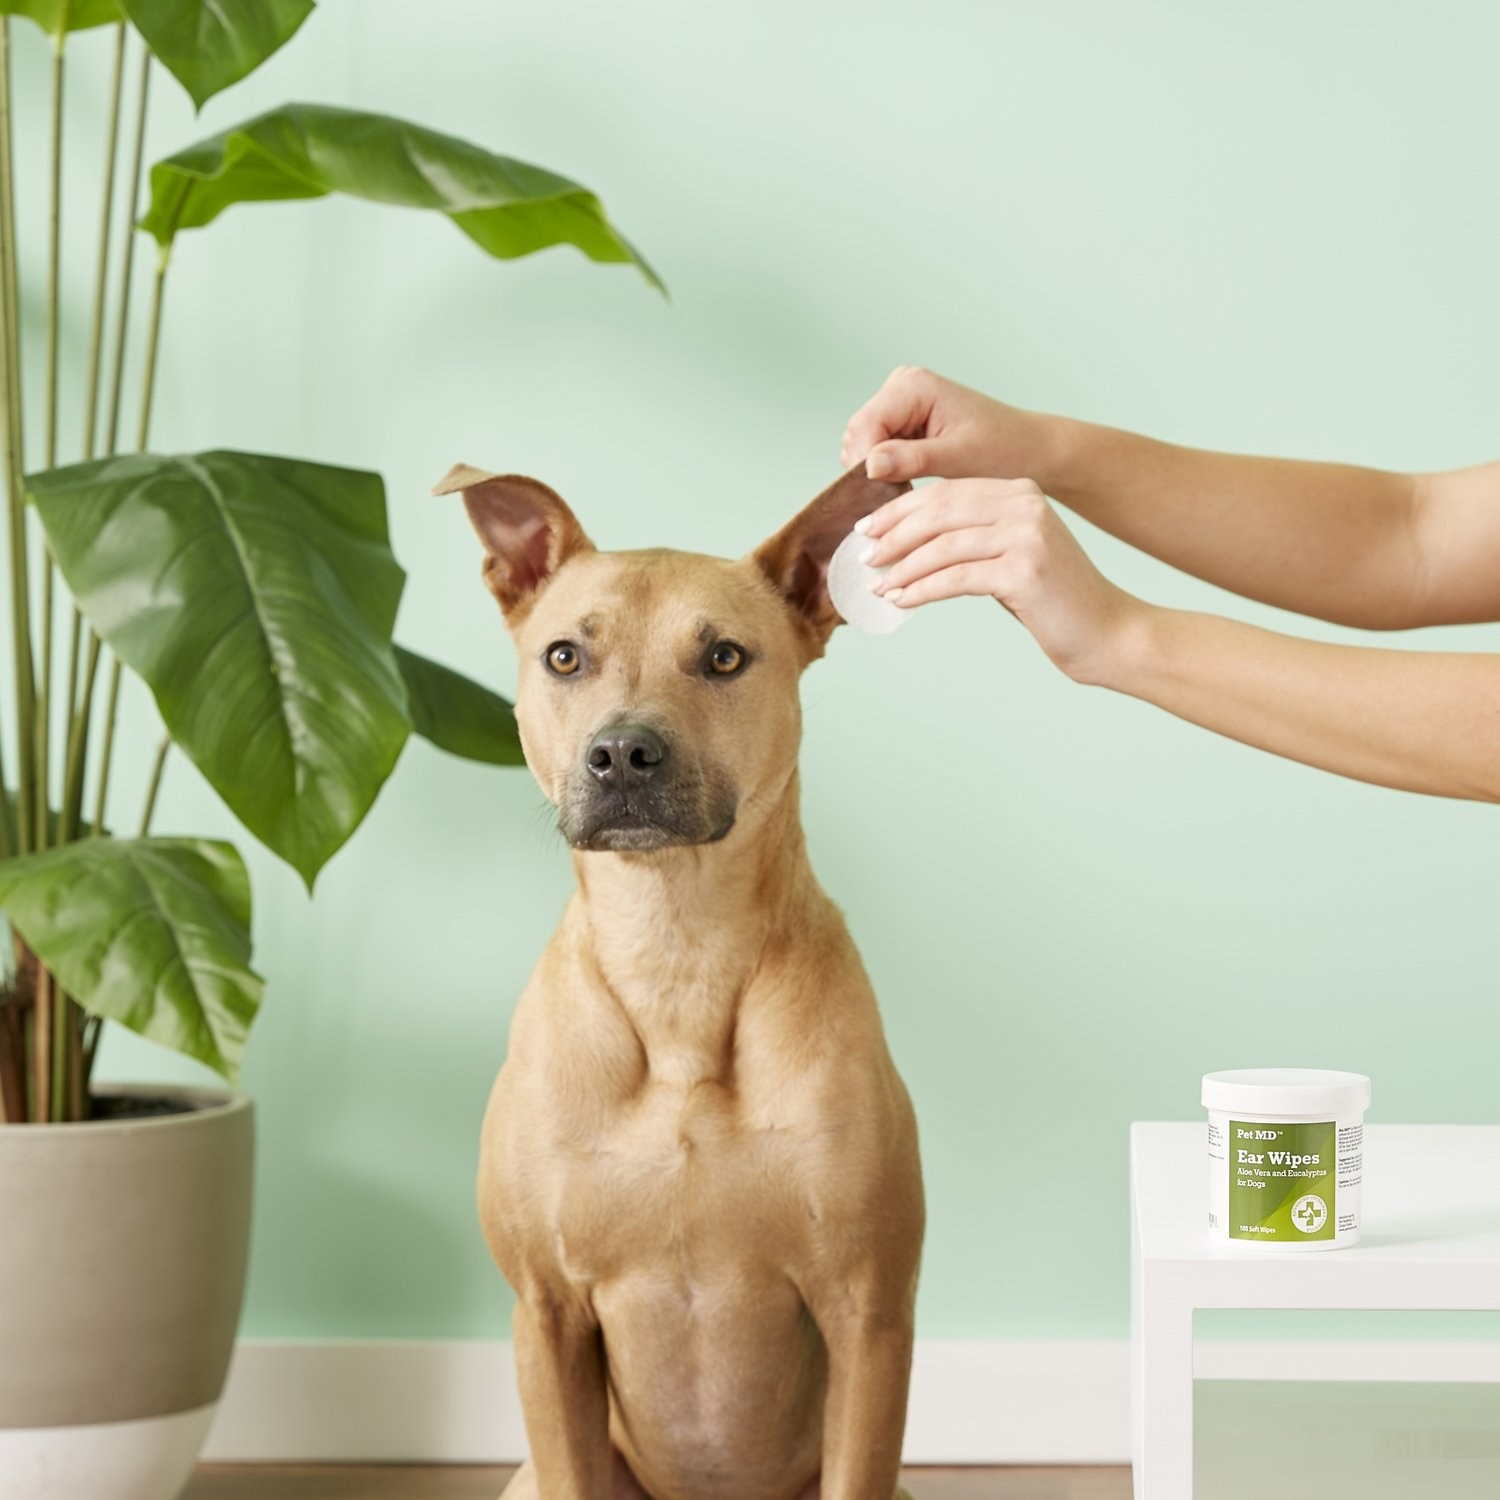 Model using ear wipes on dog